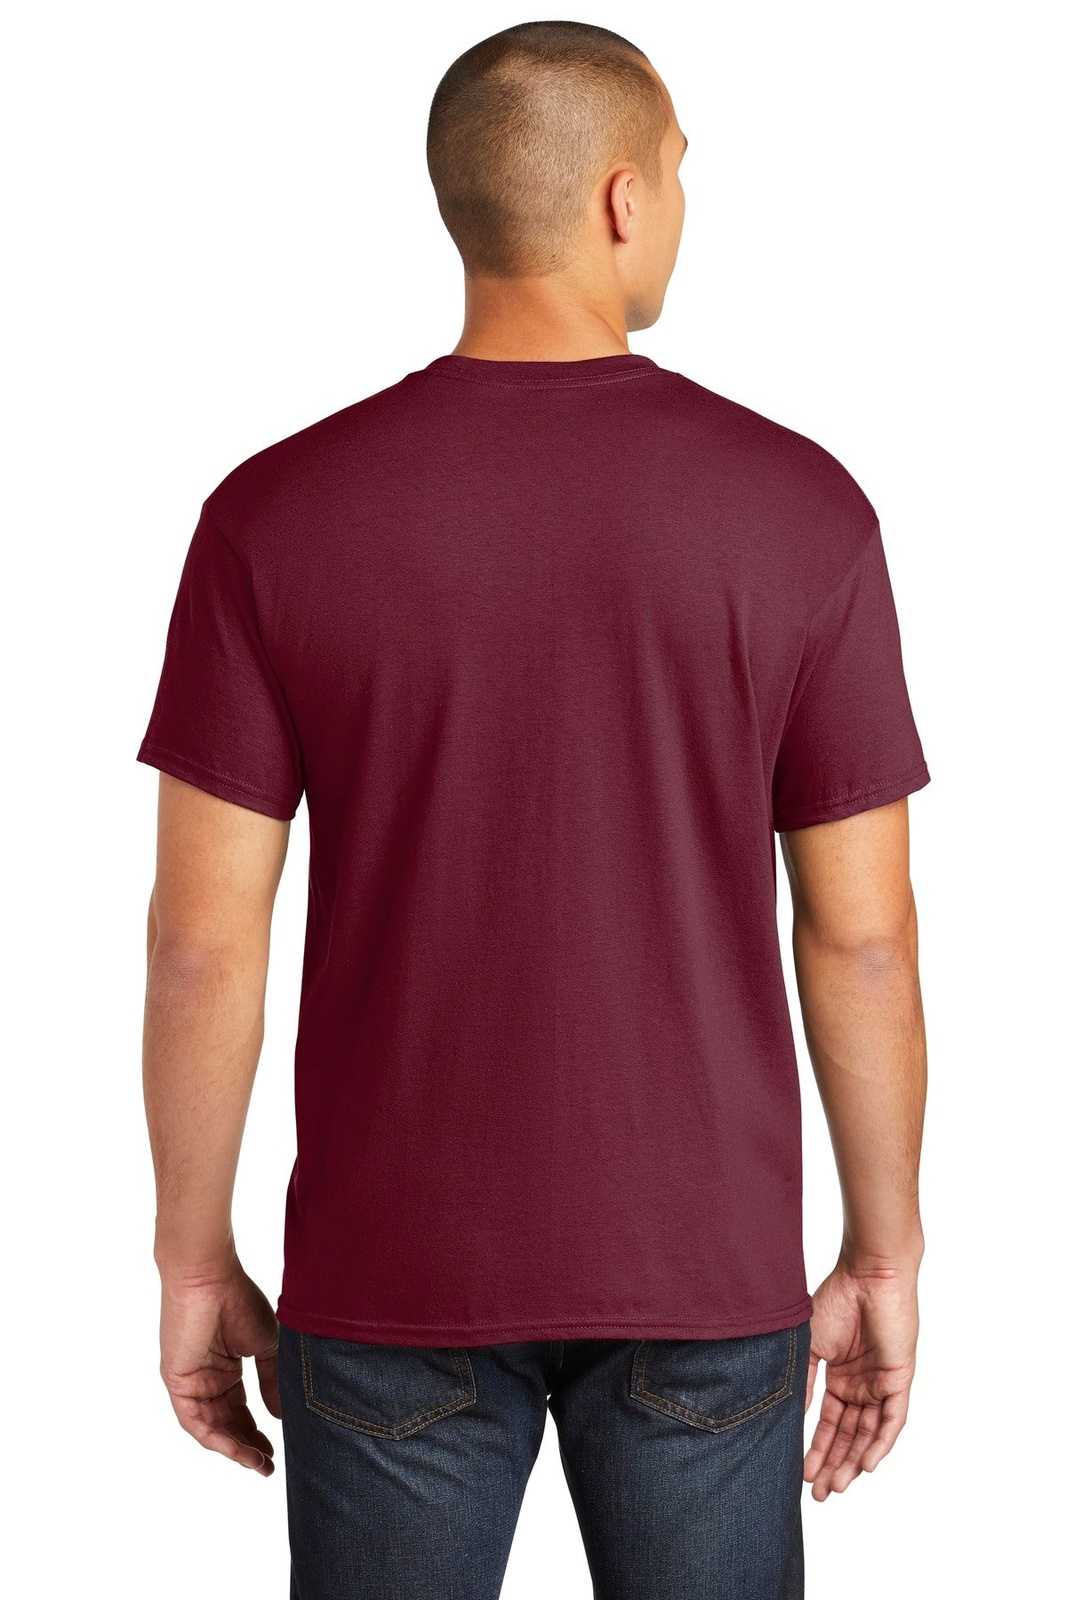 Gildan 5300 Heavy Cotton 100% Cotton Pocket T-Shirt - Maroon - HIT a Double